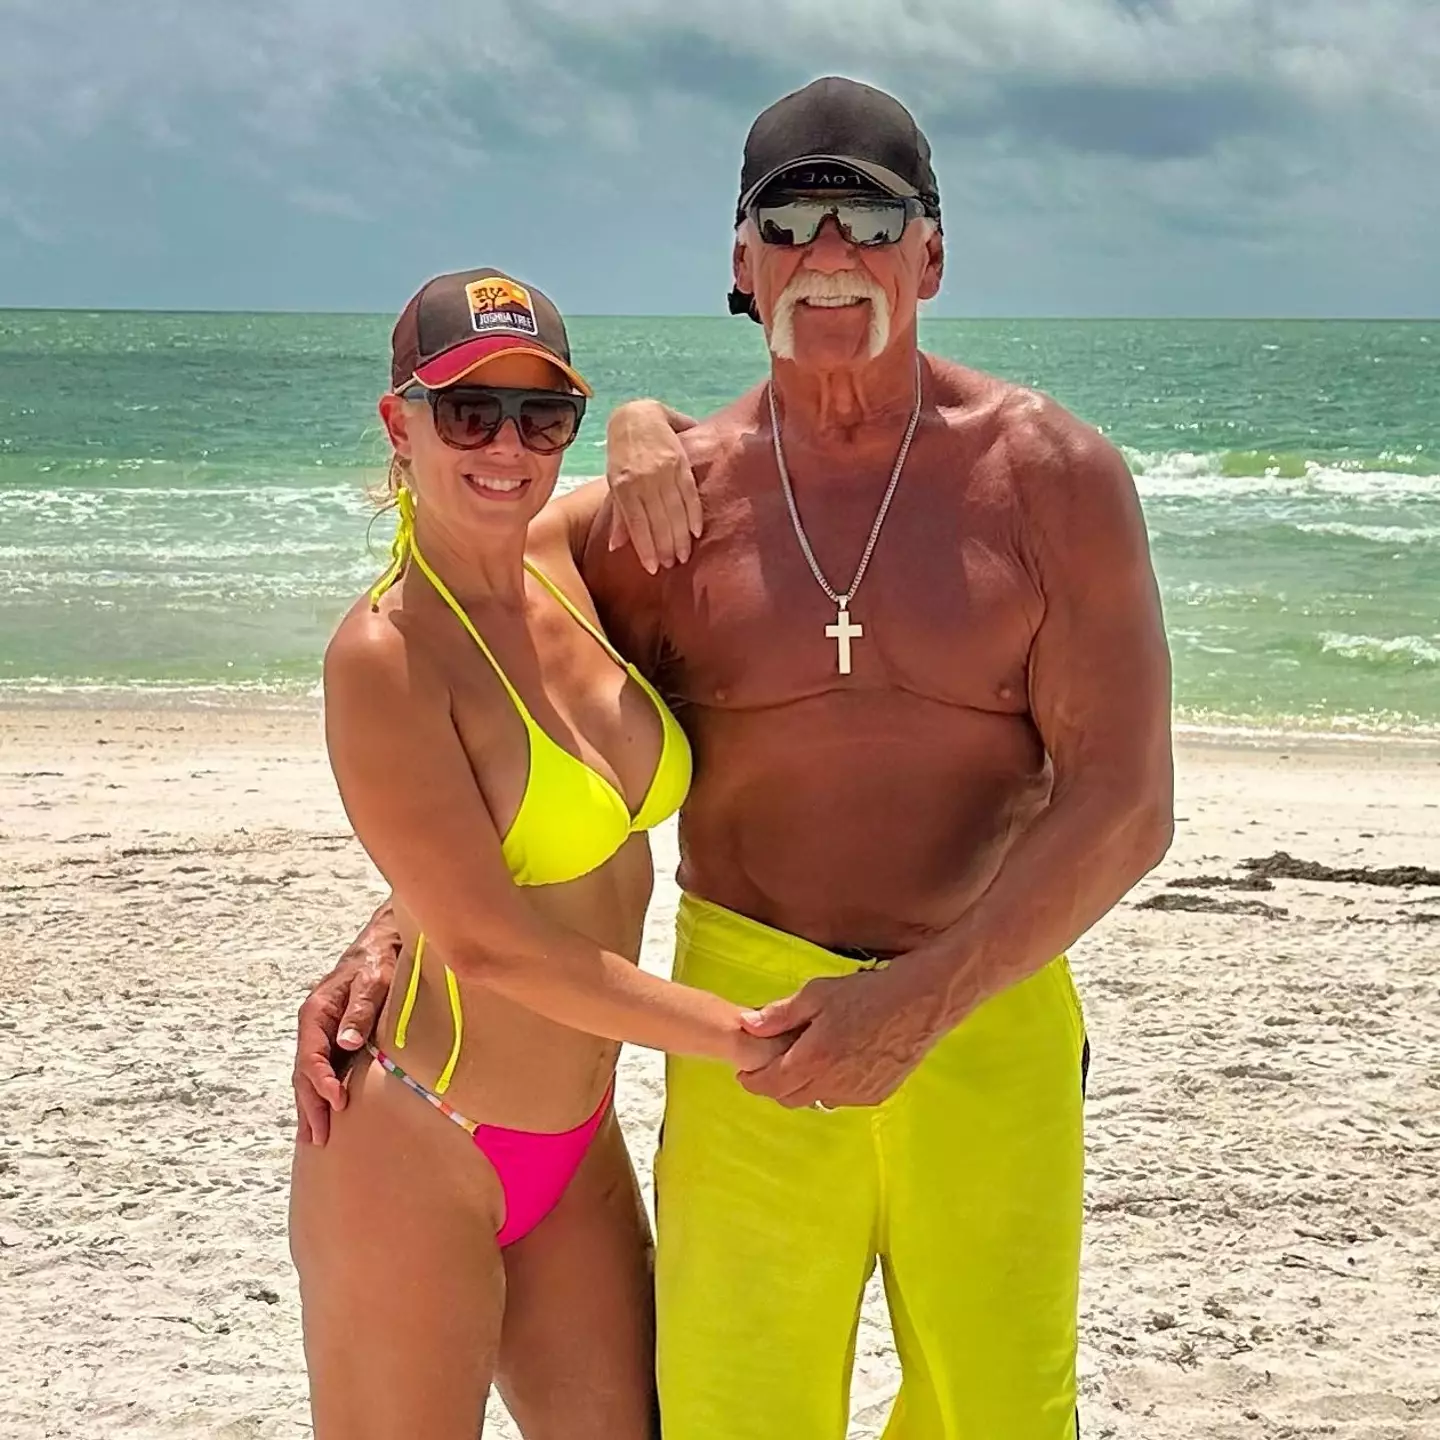 Hulk Hogan and his new fiancee Sky Daily.